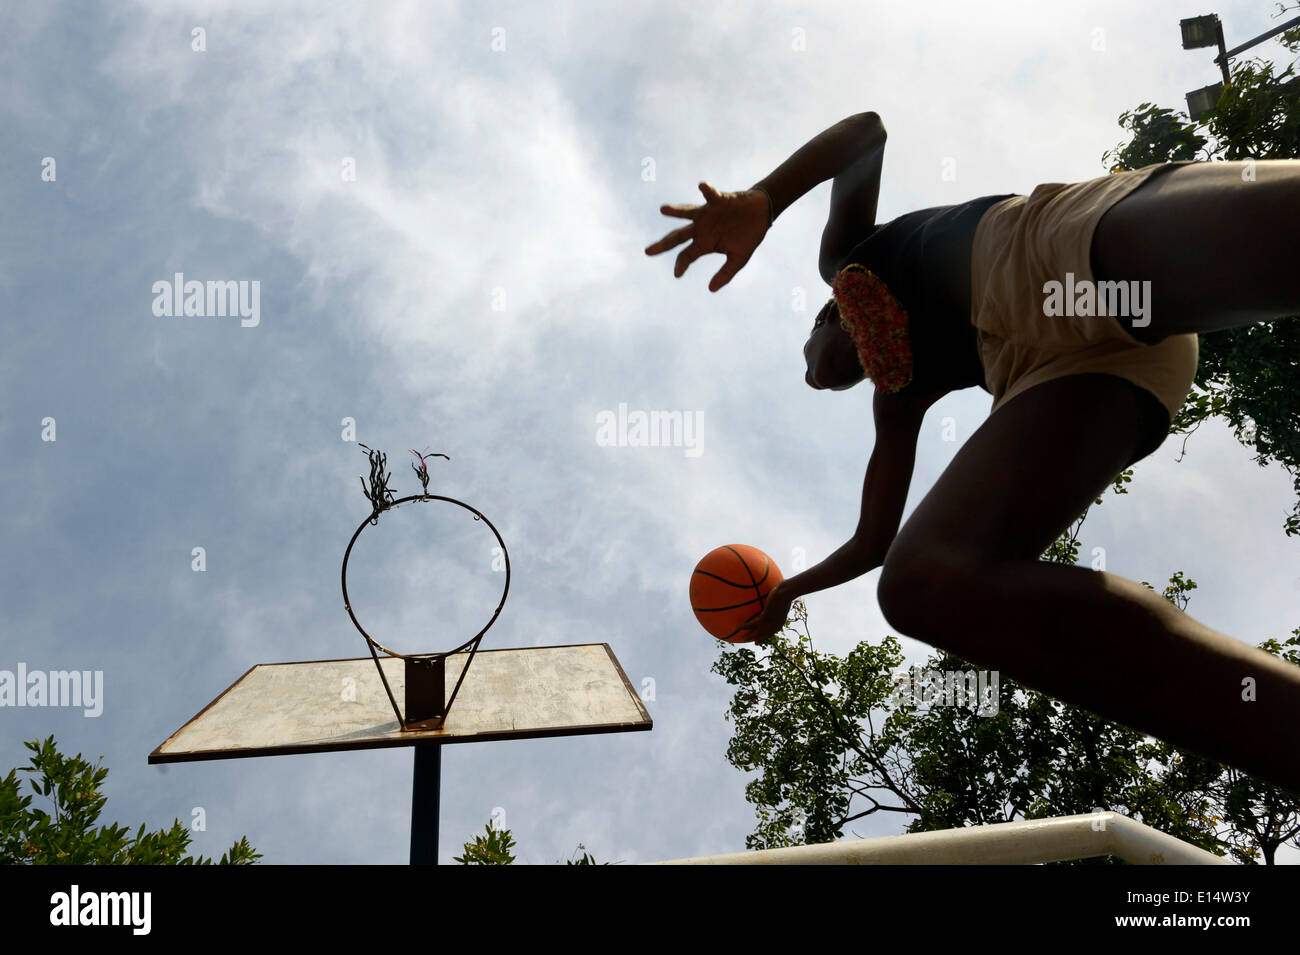 Youth making a layup in basketball, Rio de Janeiro, Rio de Janeiro State, Brazil Stock Photo